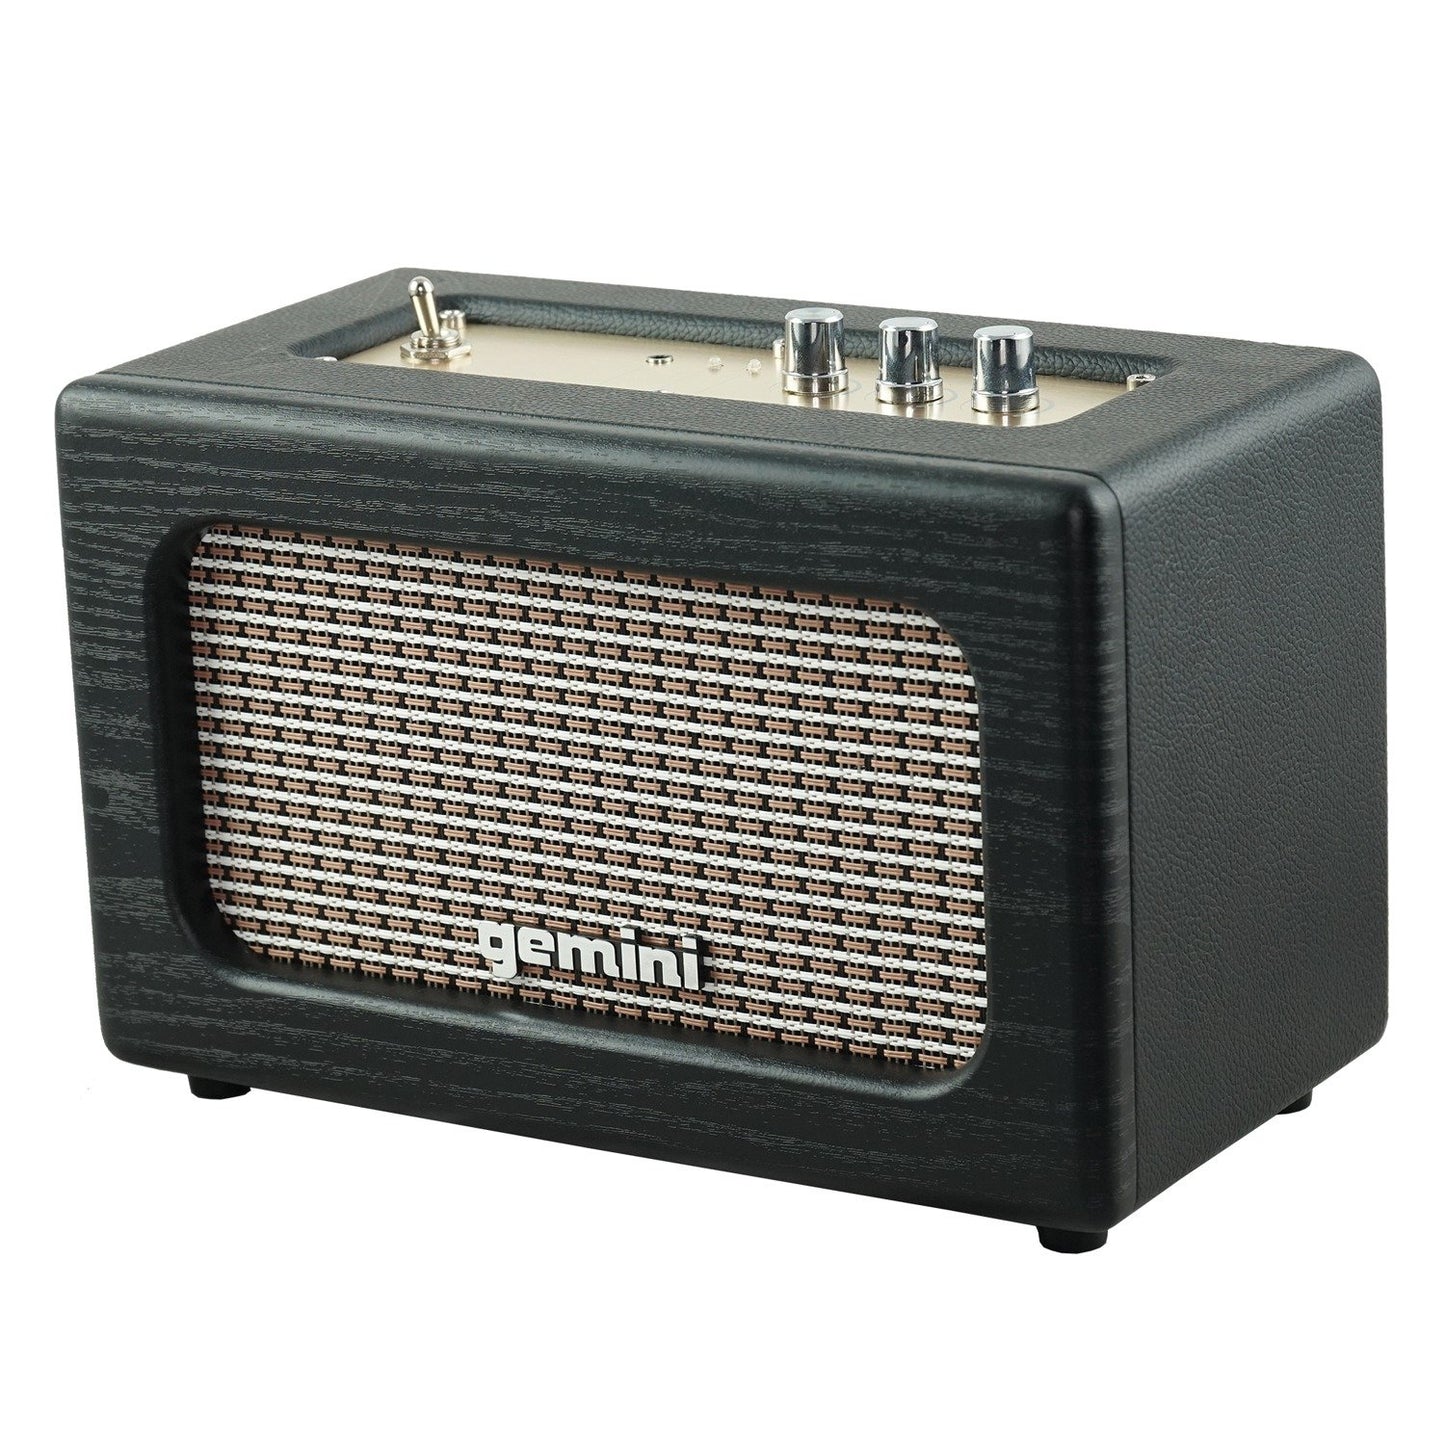 Gemini GTR-100 Portable Bluetooth Speaker